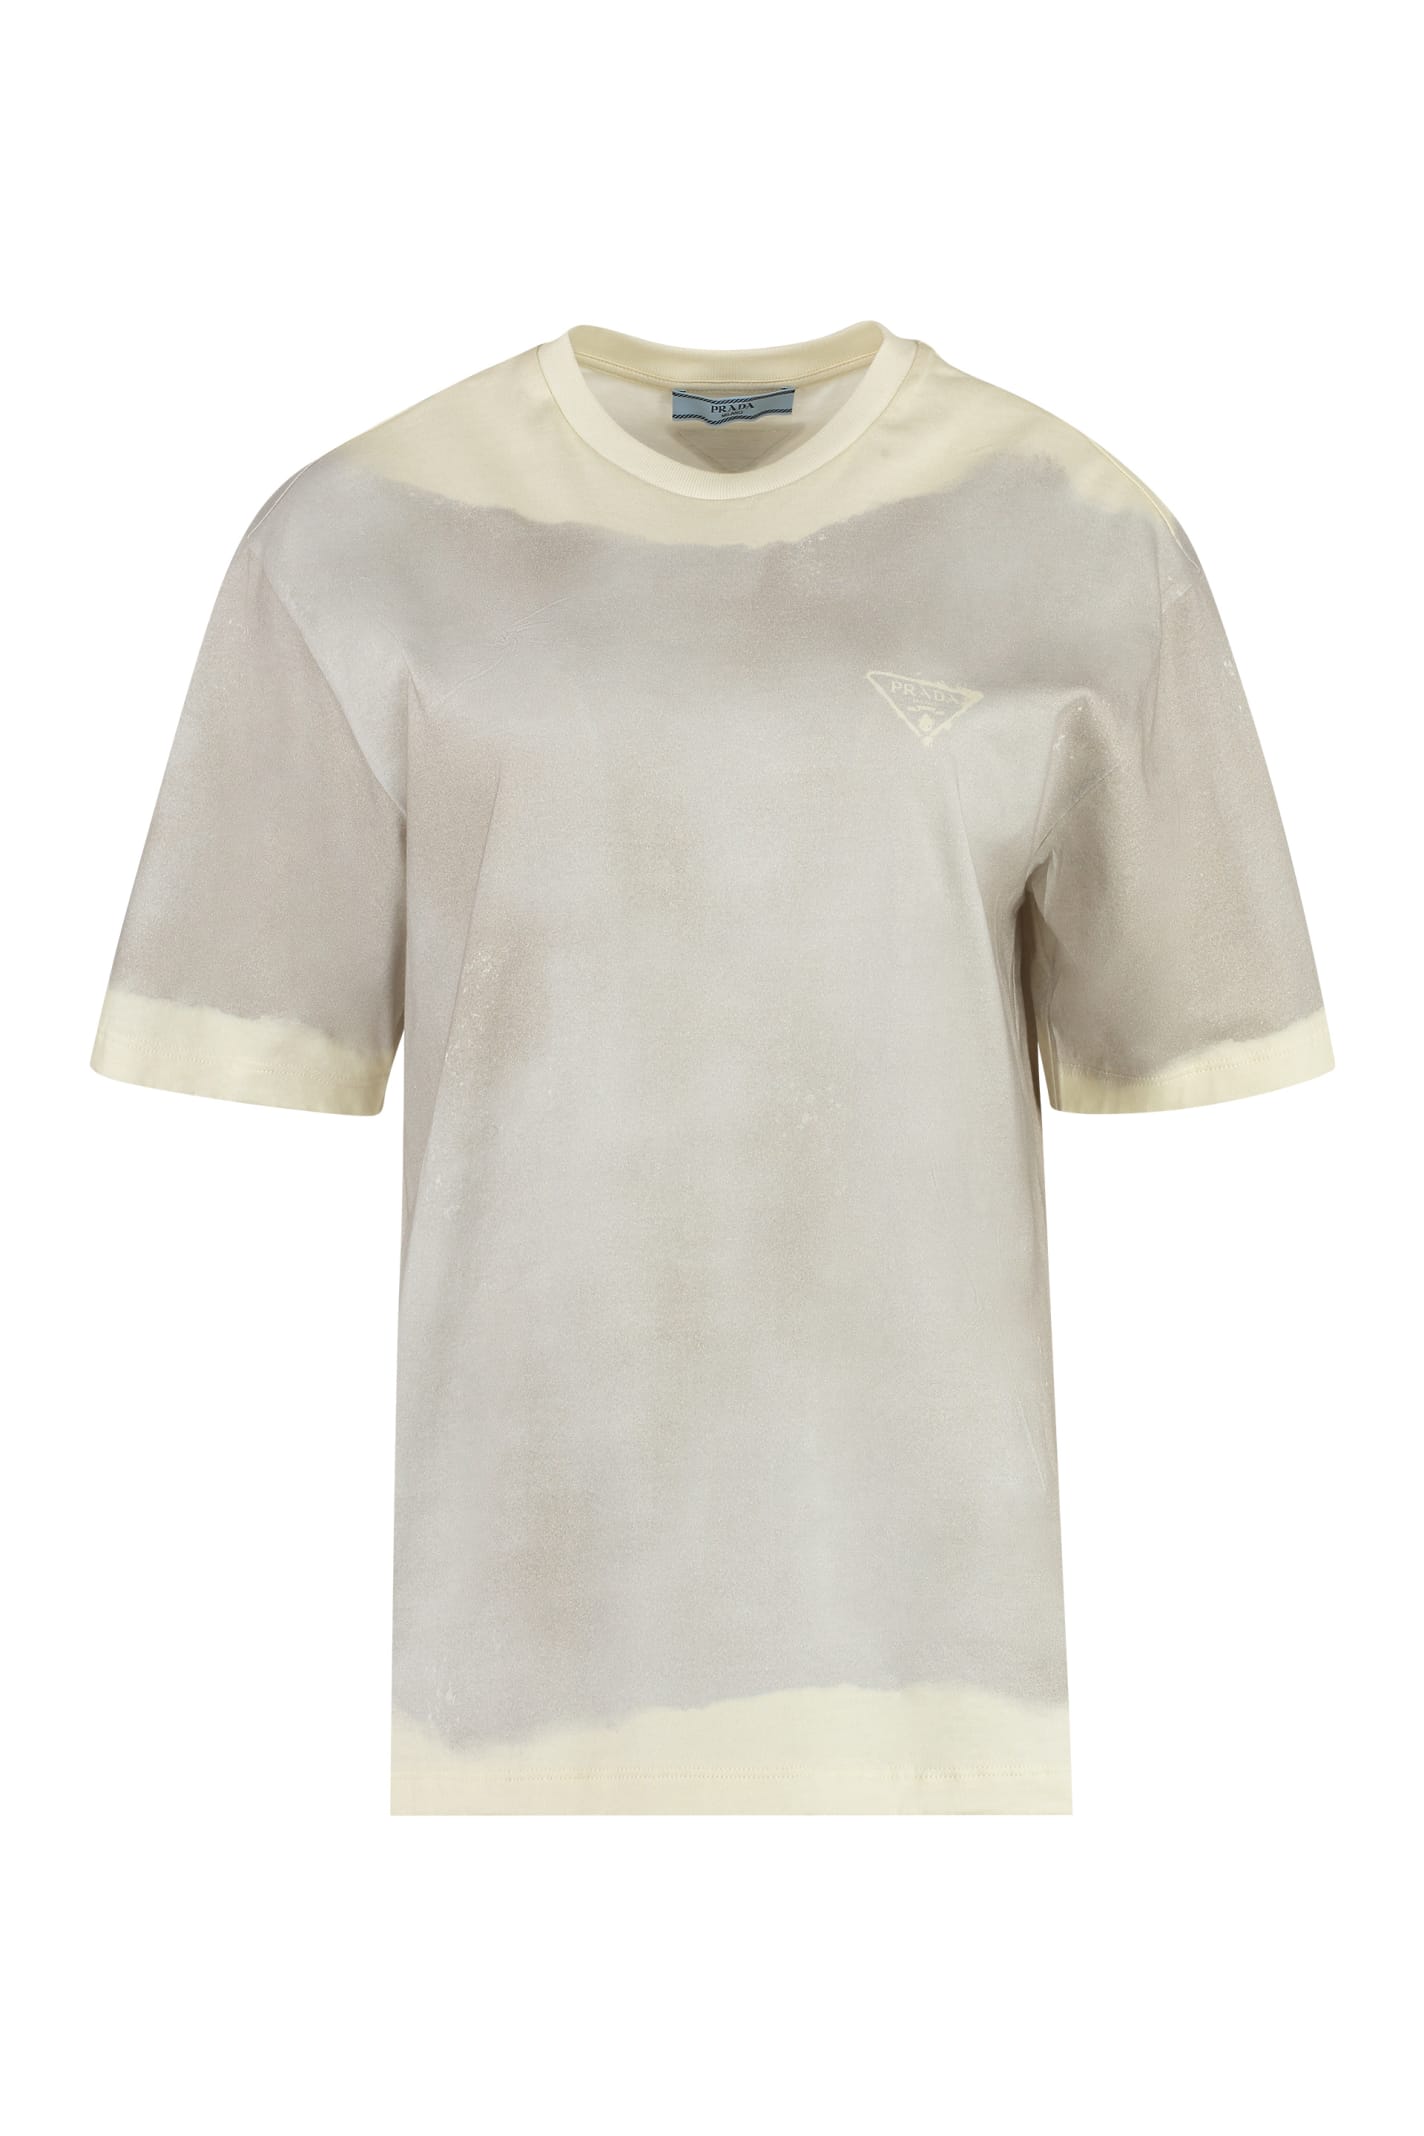 Prada Cotton Crew-neck T-shirt